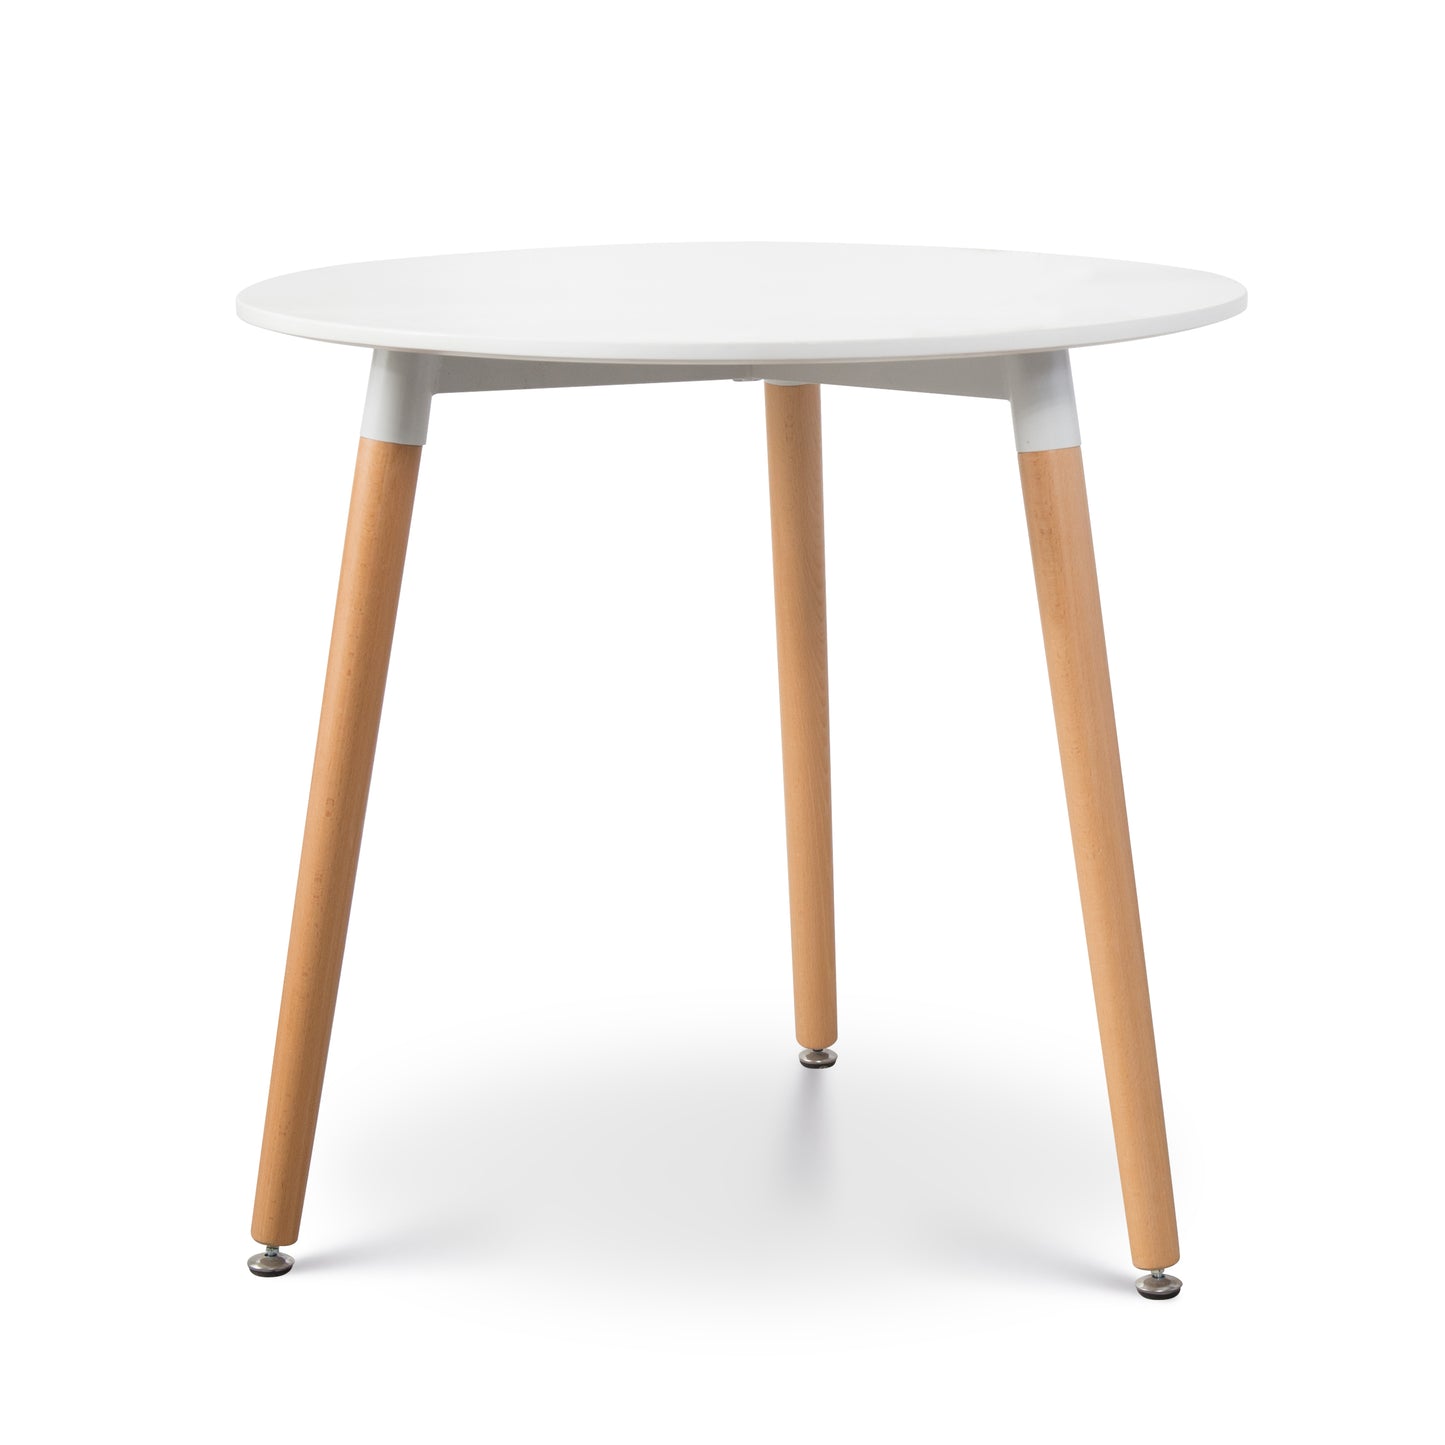 Petite table ronde JENY blanche style scandinave Ø60 cm